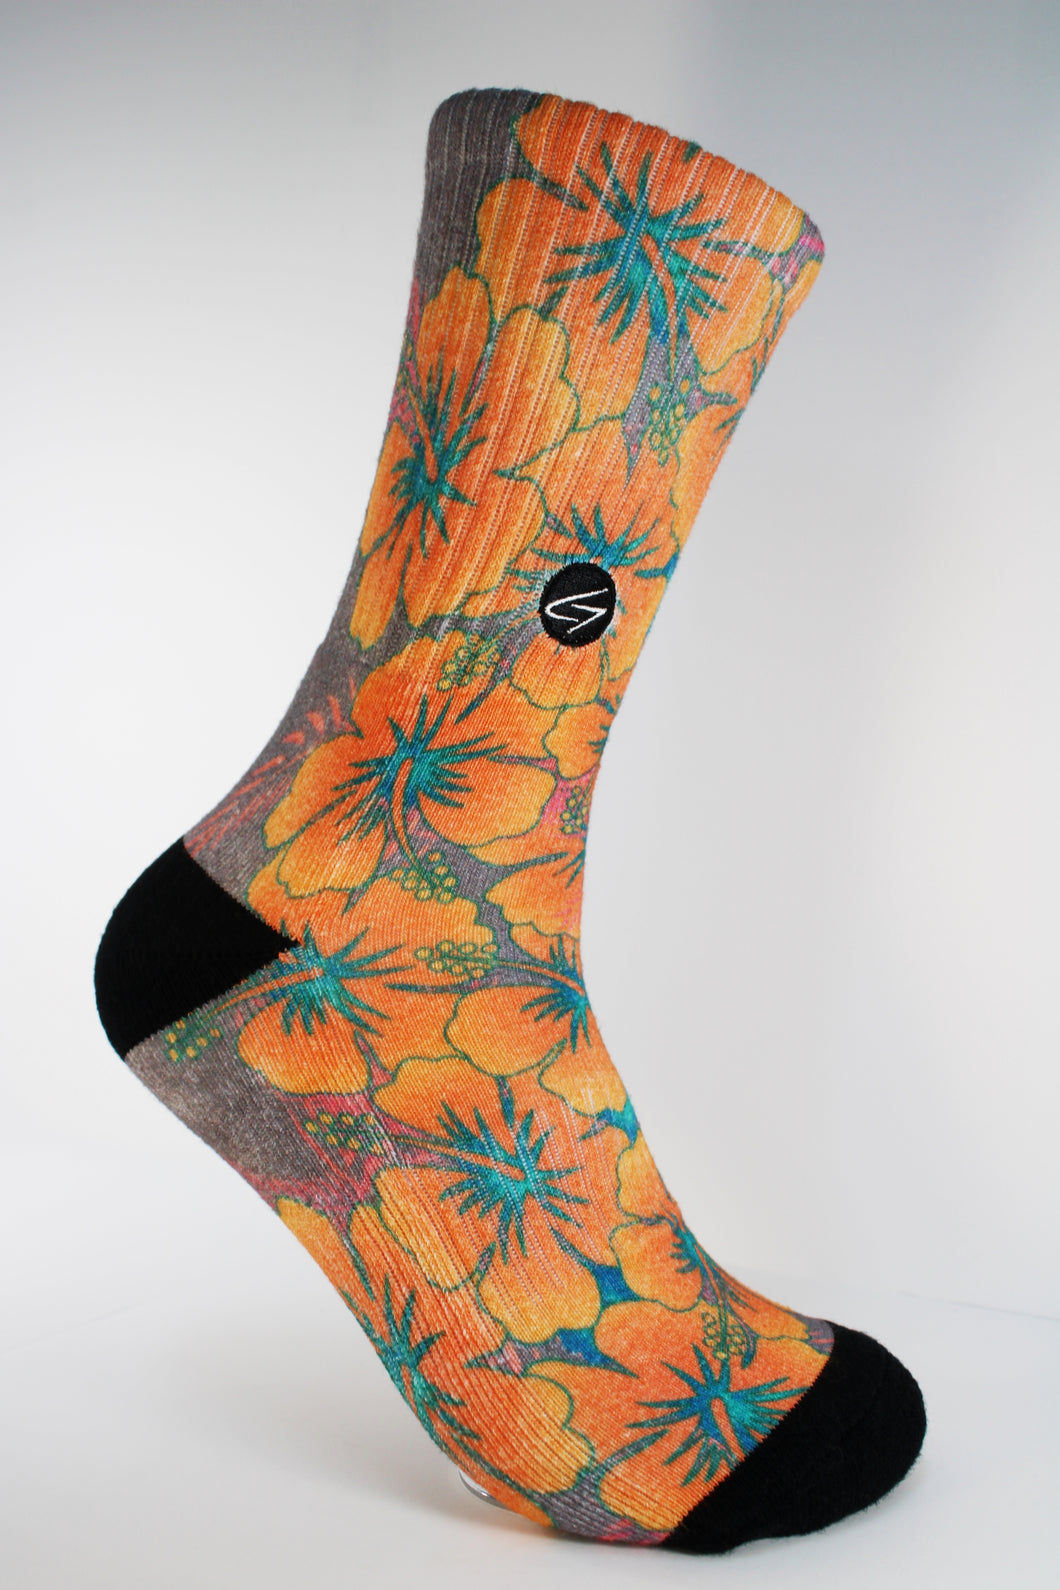 Maui - Glide Socks